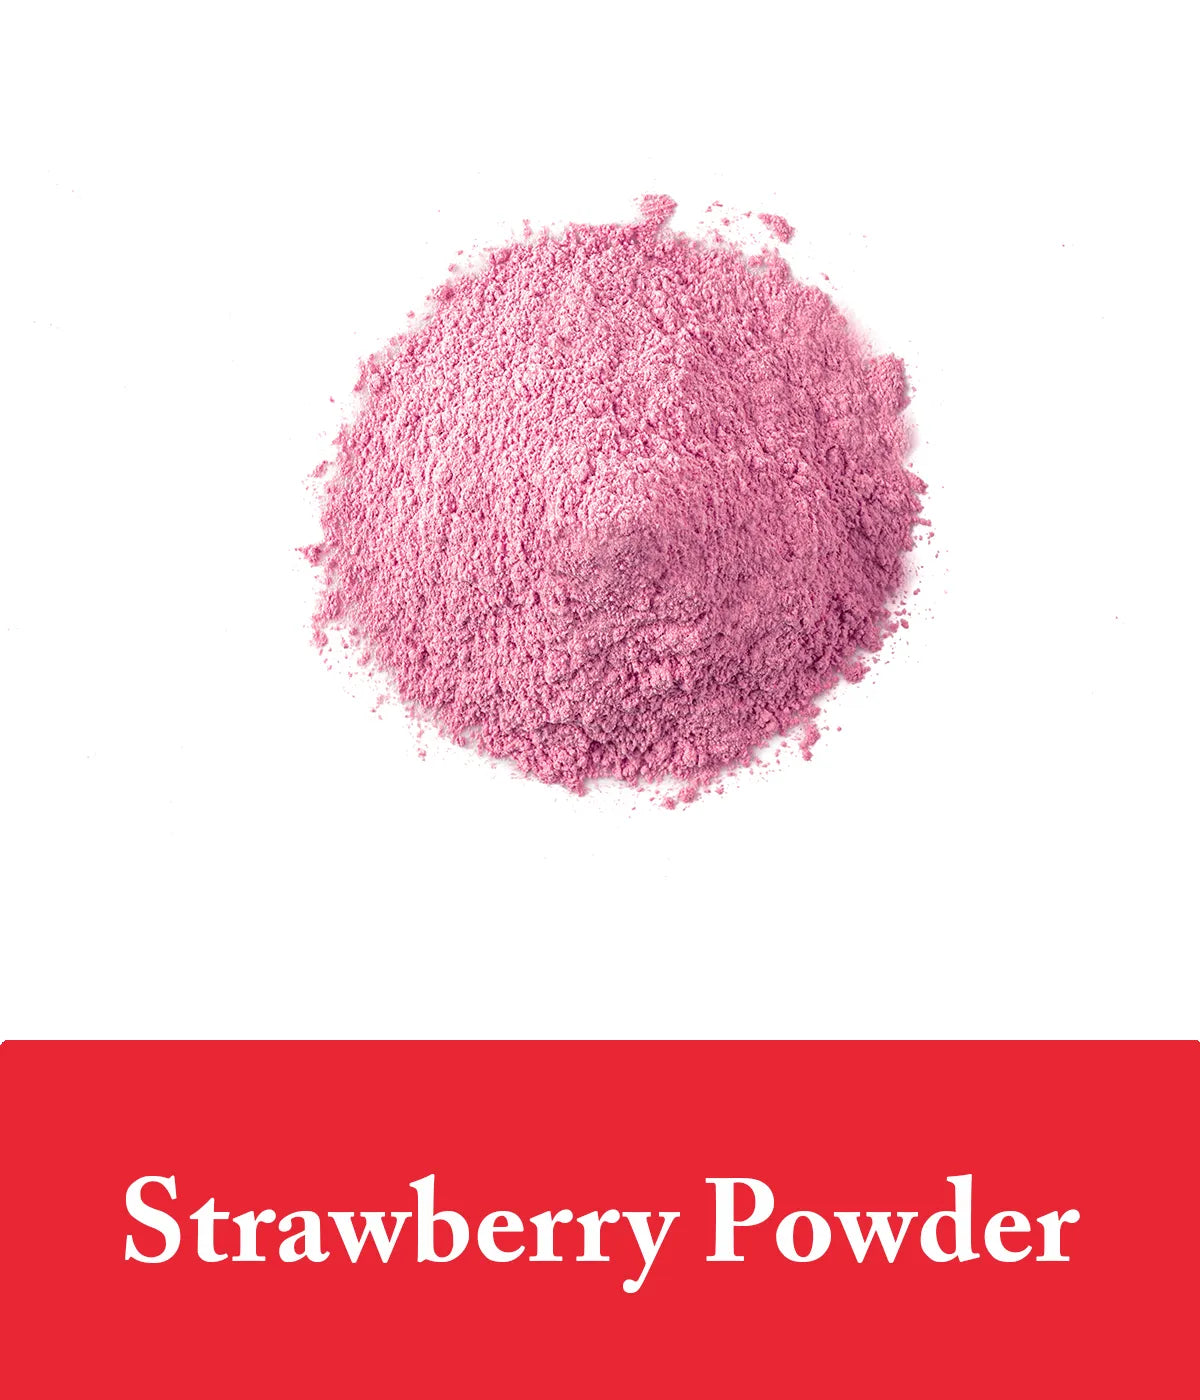 Strawberry Powder For Shampoo Bars